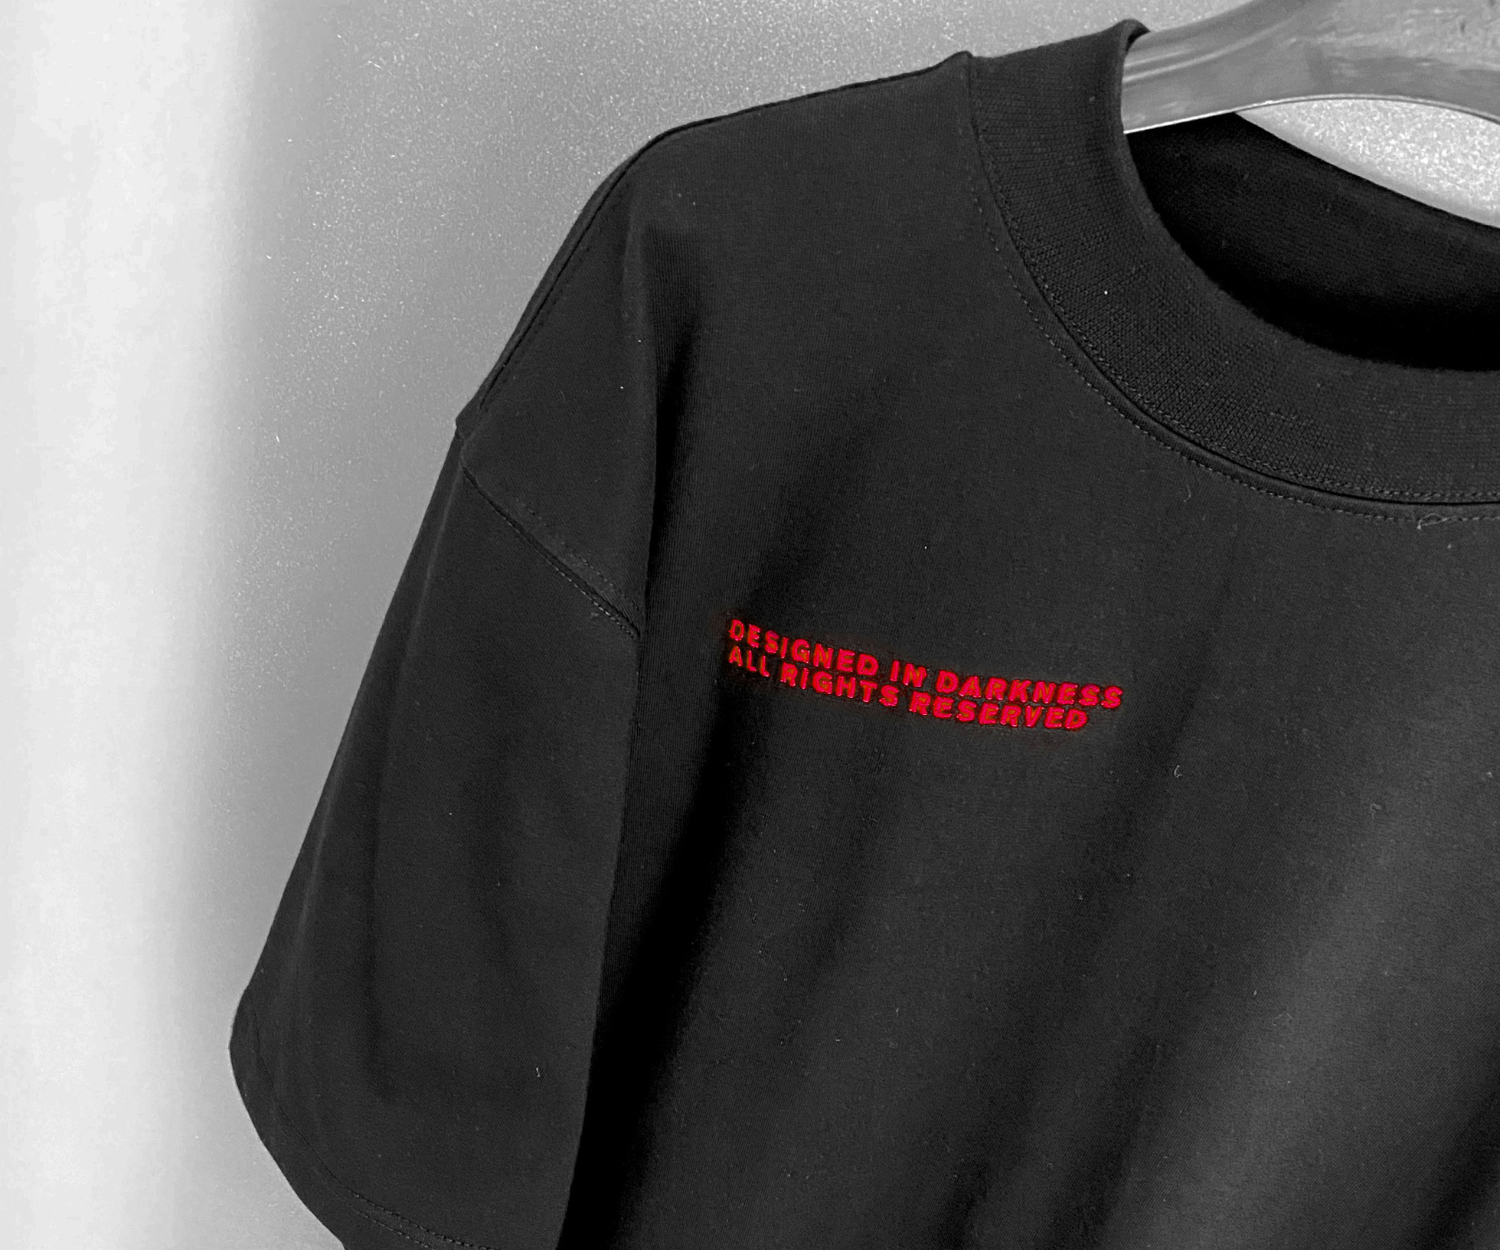 Psycho Budapest Red Black Drip T-shirt